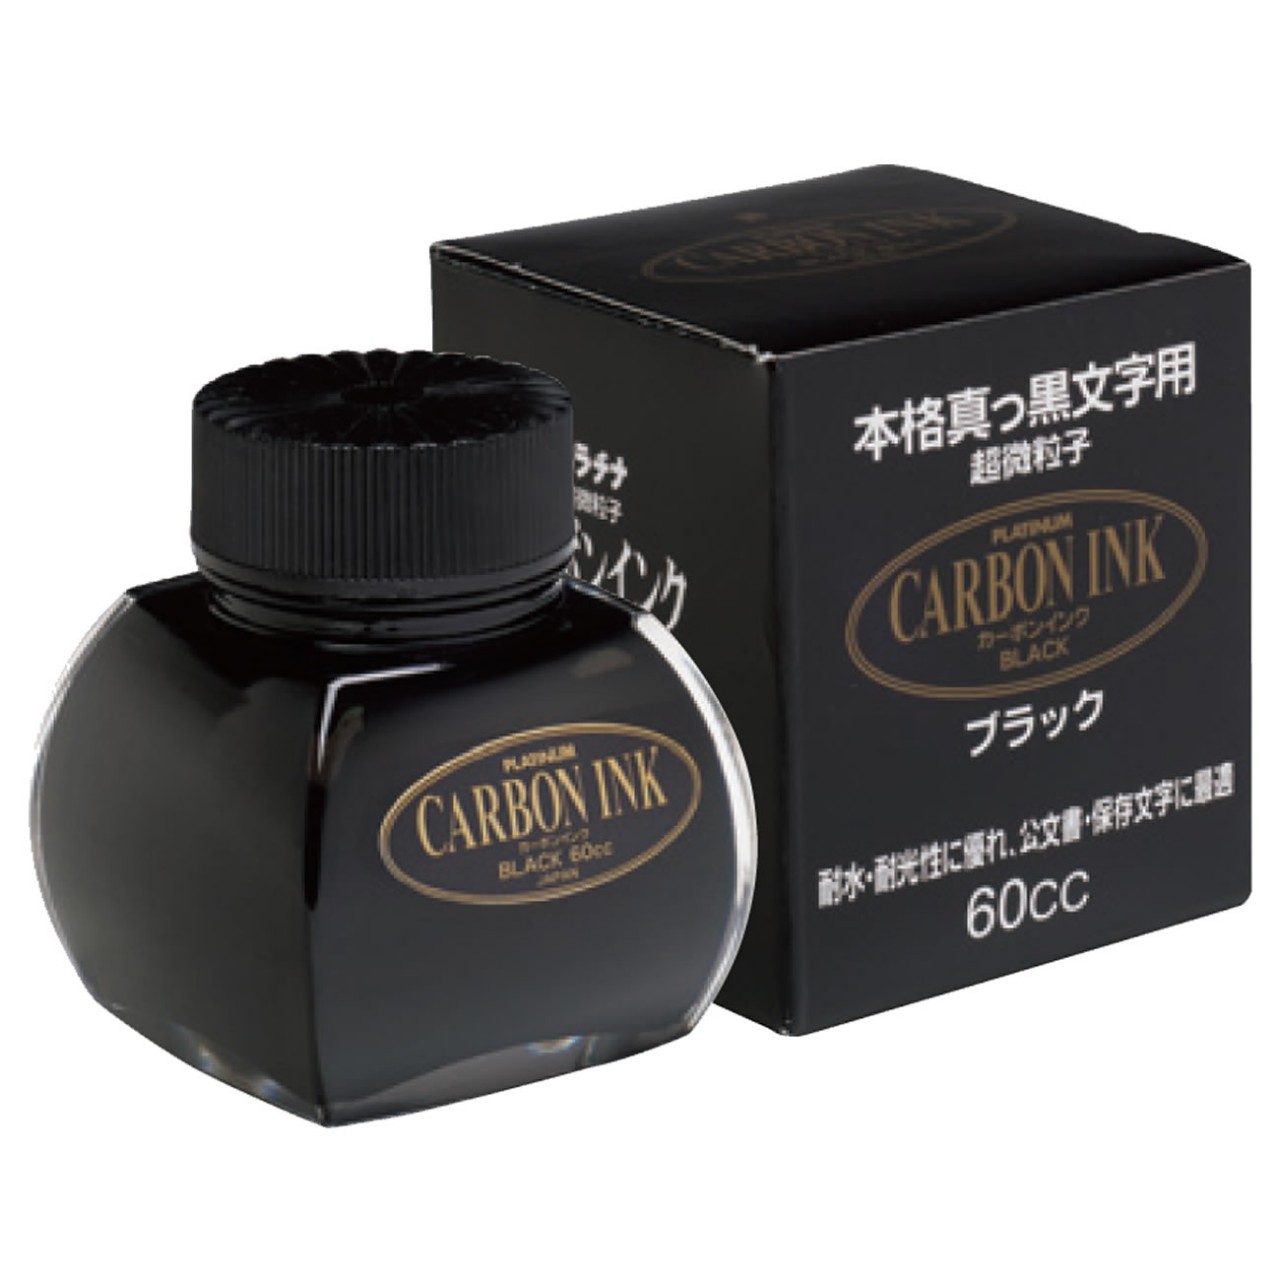 Platinum Carbon bottle ink 60cc Black